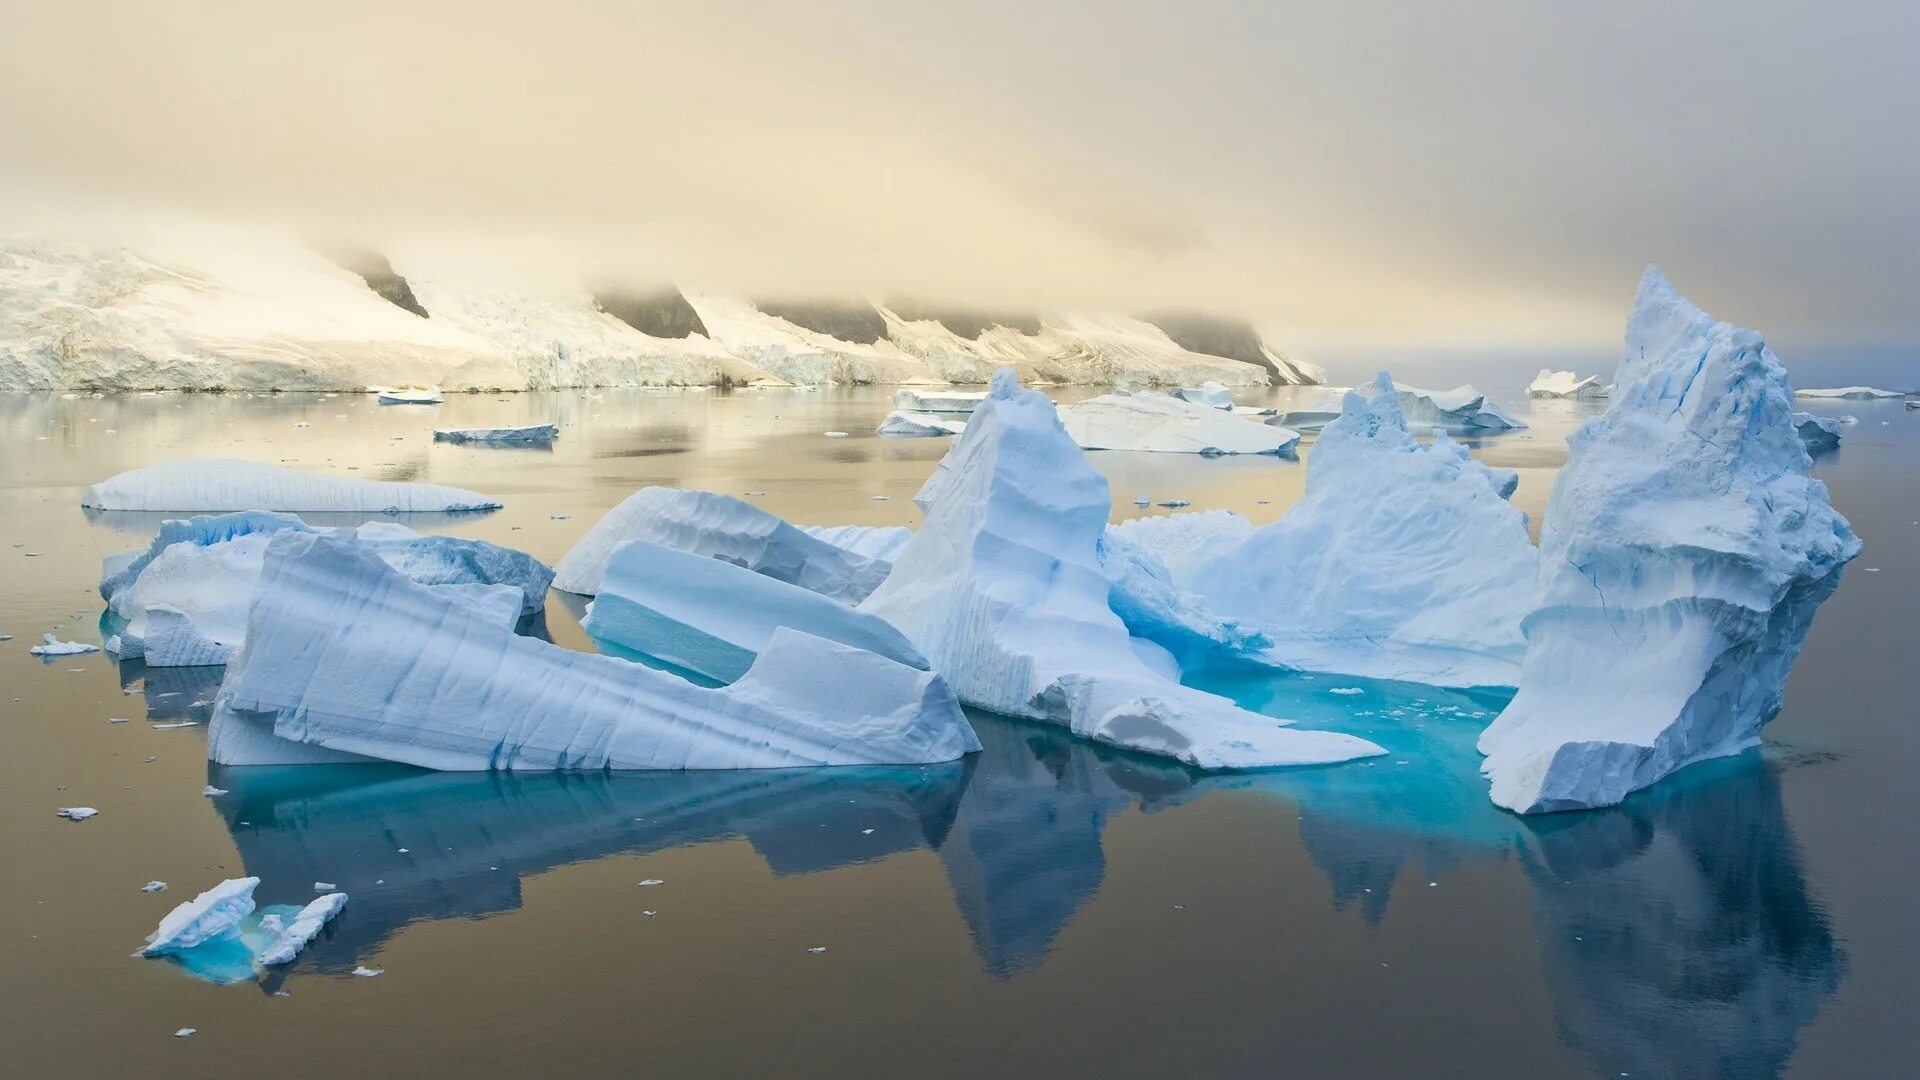 Мелкий лед на воде 4. Северный Ледовитый океан и Антарктида. Ледники айсберги Антарктиды. Ледовитый океан Айсберг. Исландия Северный Ледовитый океан.